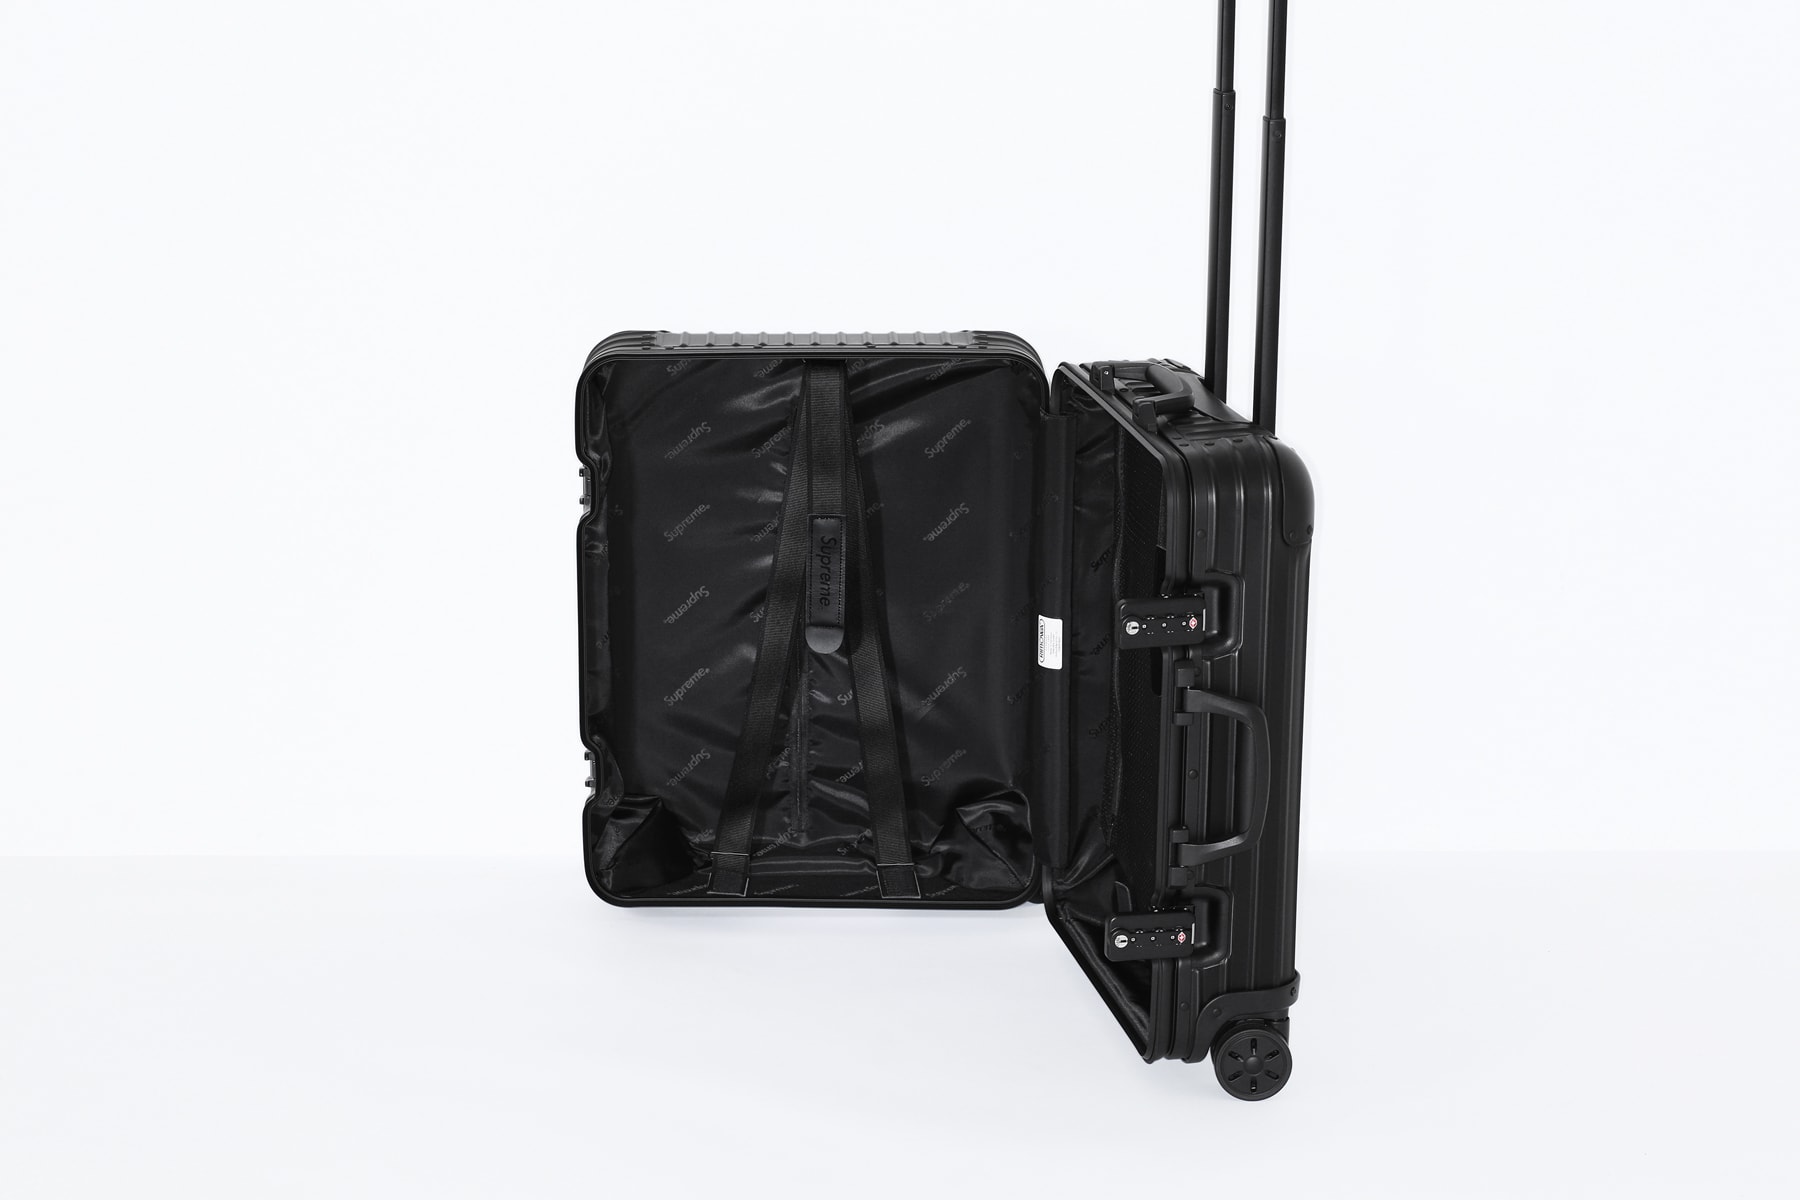 RIMOWA 將於全球指定 6 家分店發售 Supreme x RIMOWA 行李箱系列